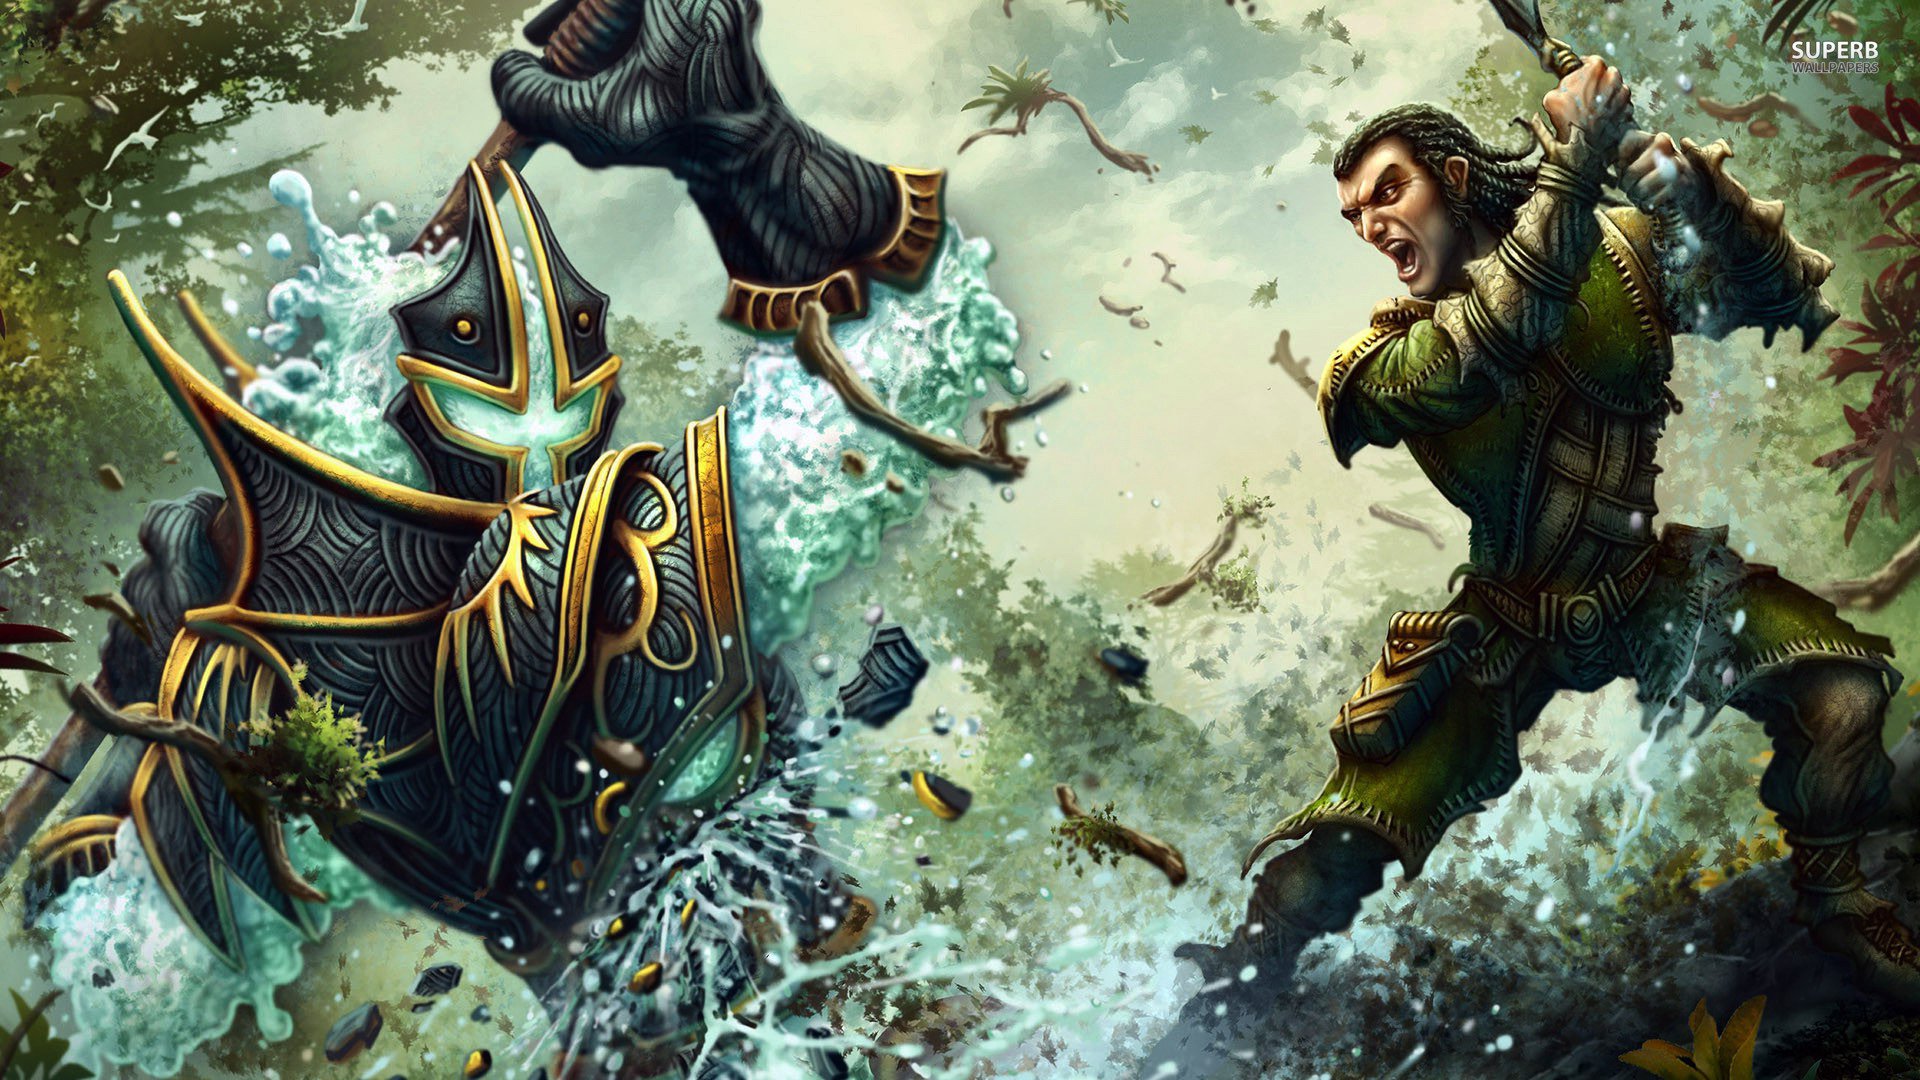 Battle Of The Warriors HD wallpapers, Desktop wallpaper - most viewed